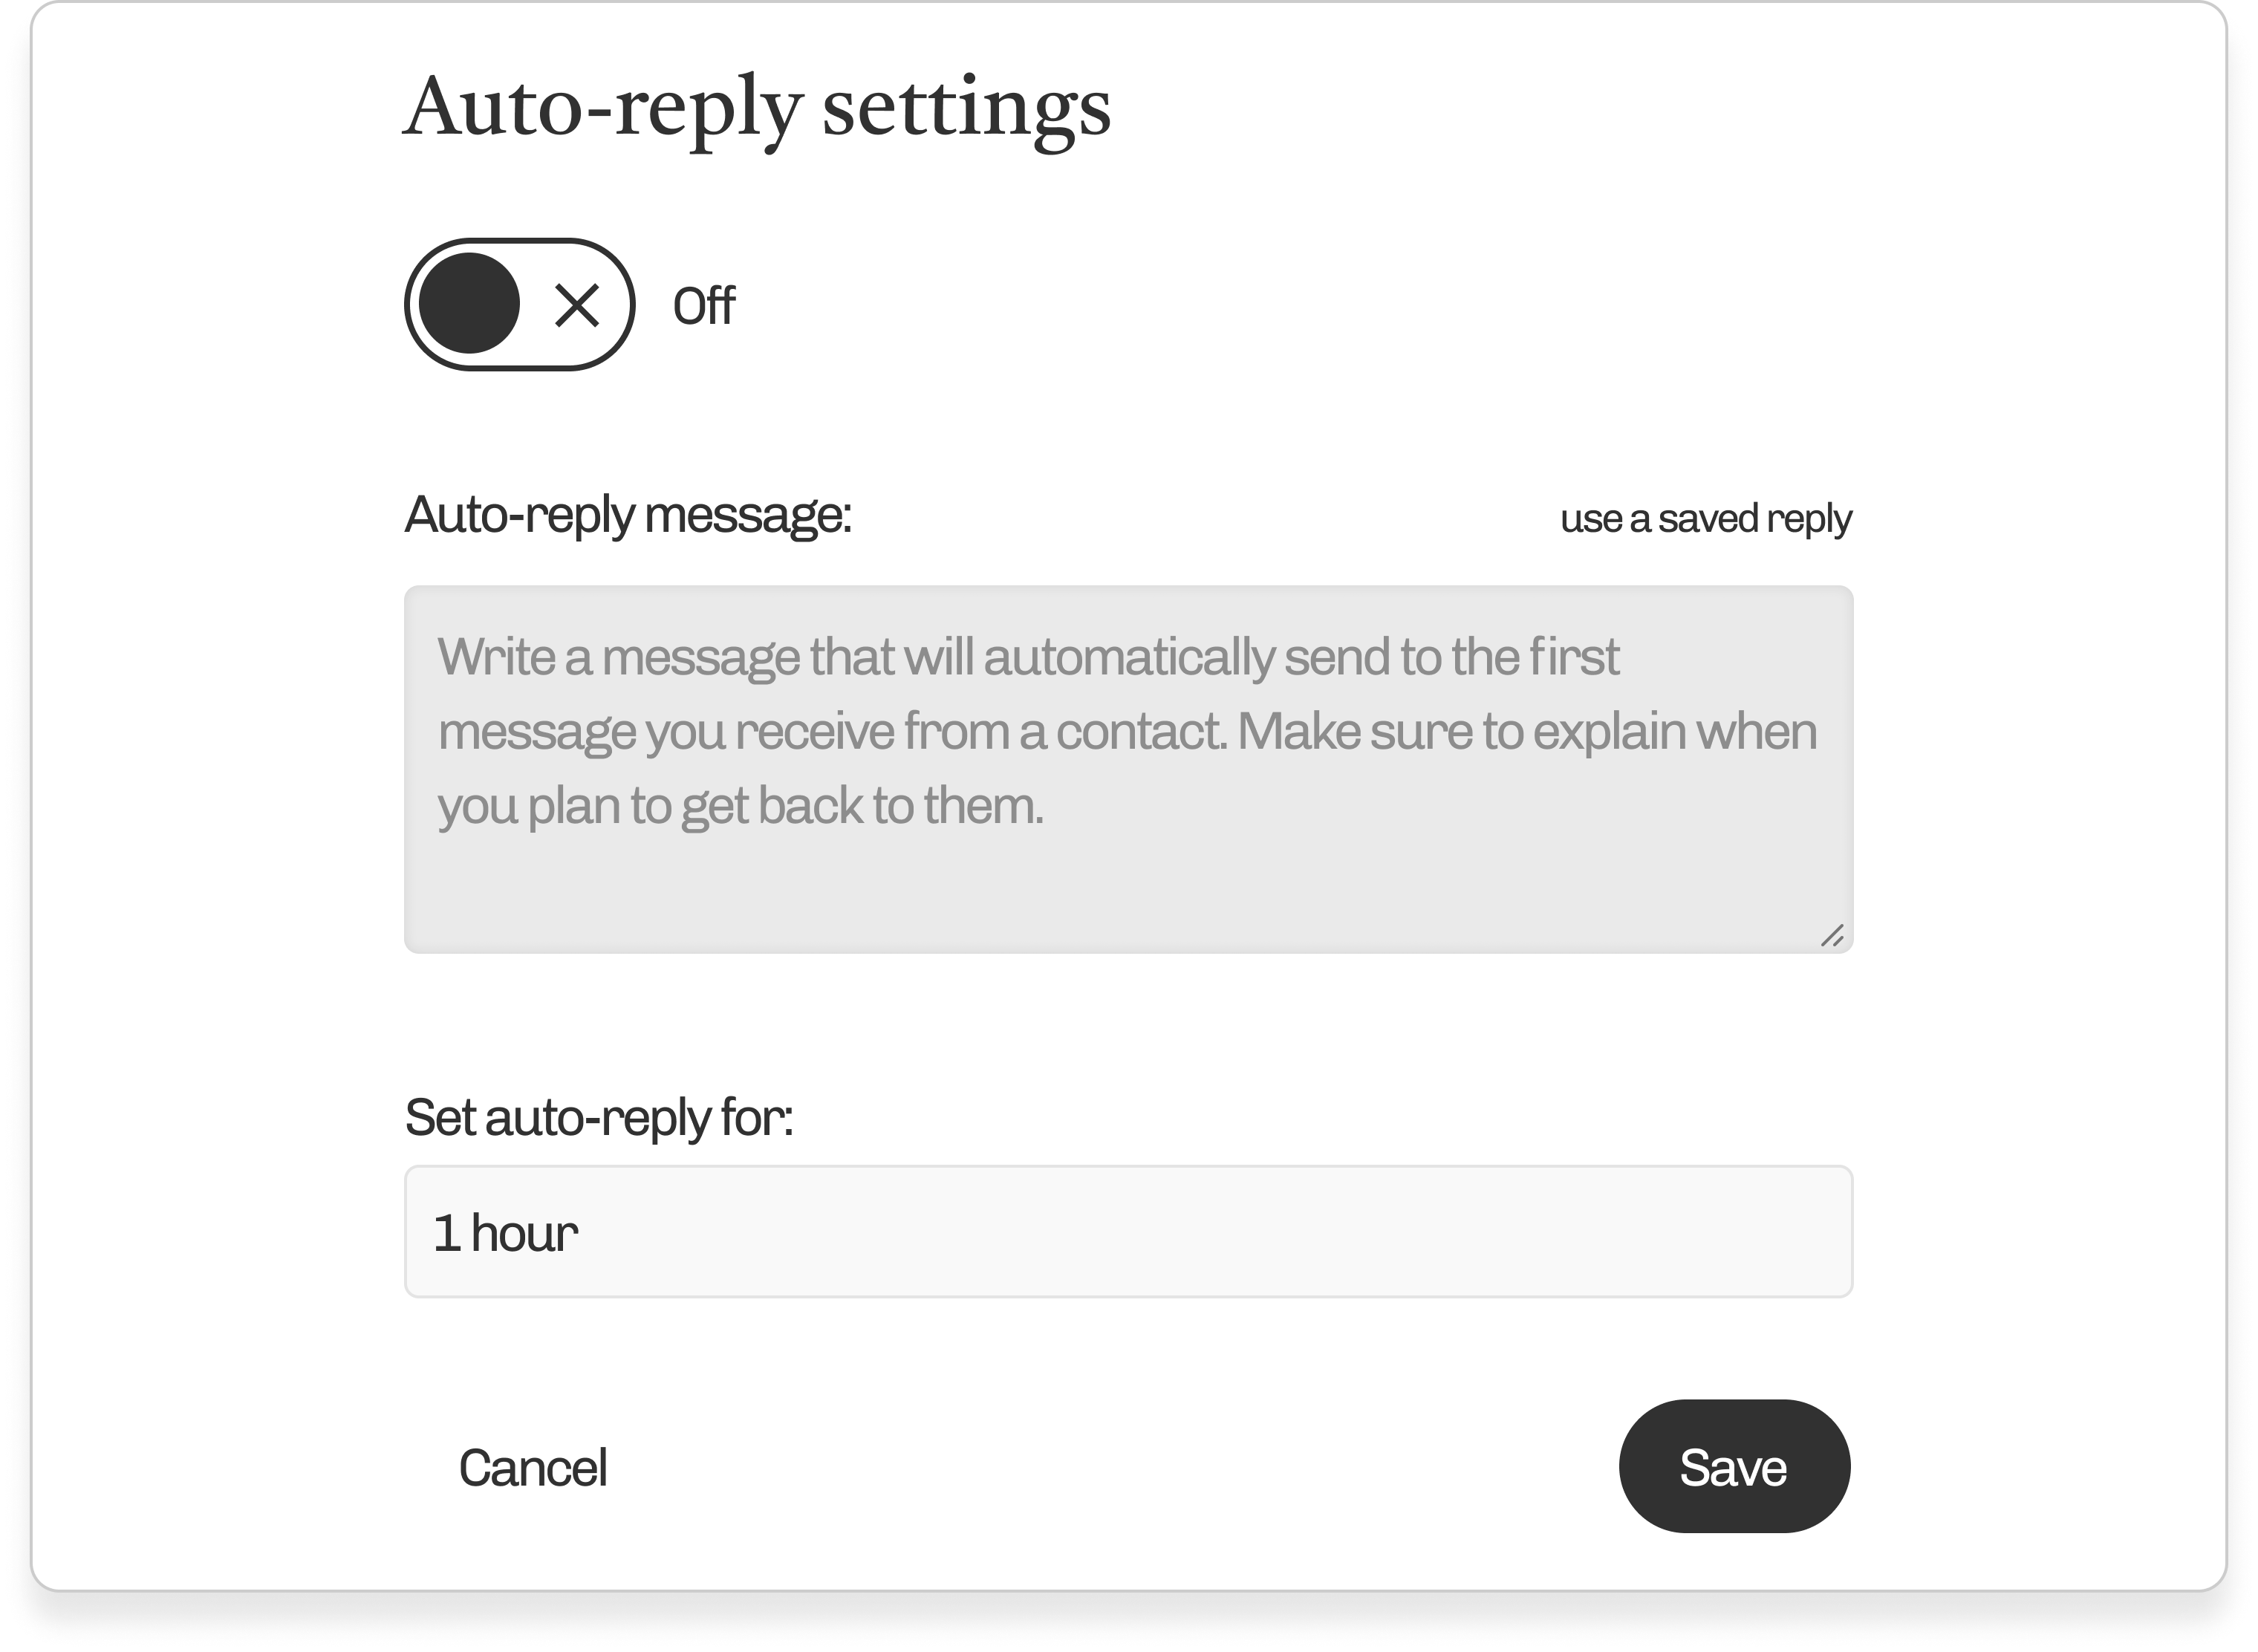 Auto reply image off